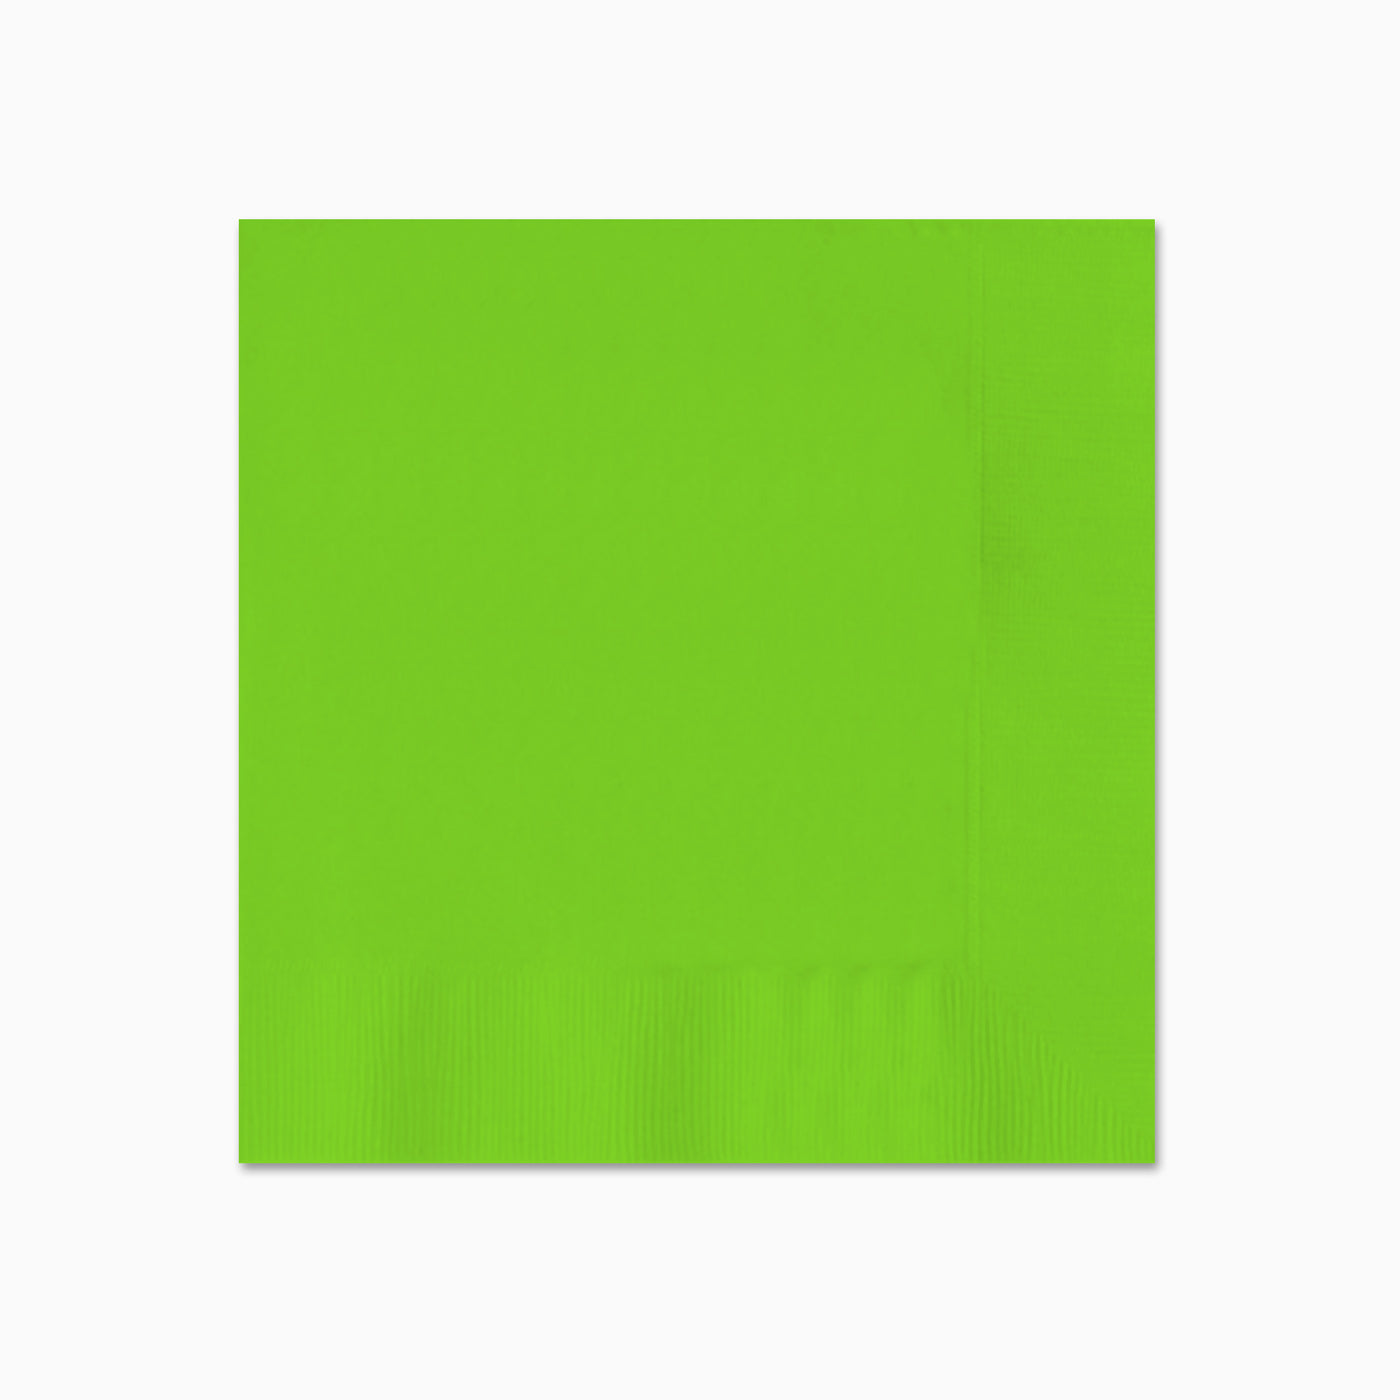 Green fluorine napkins